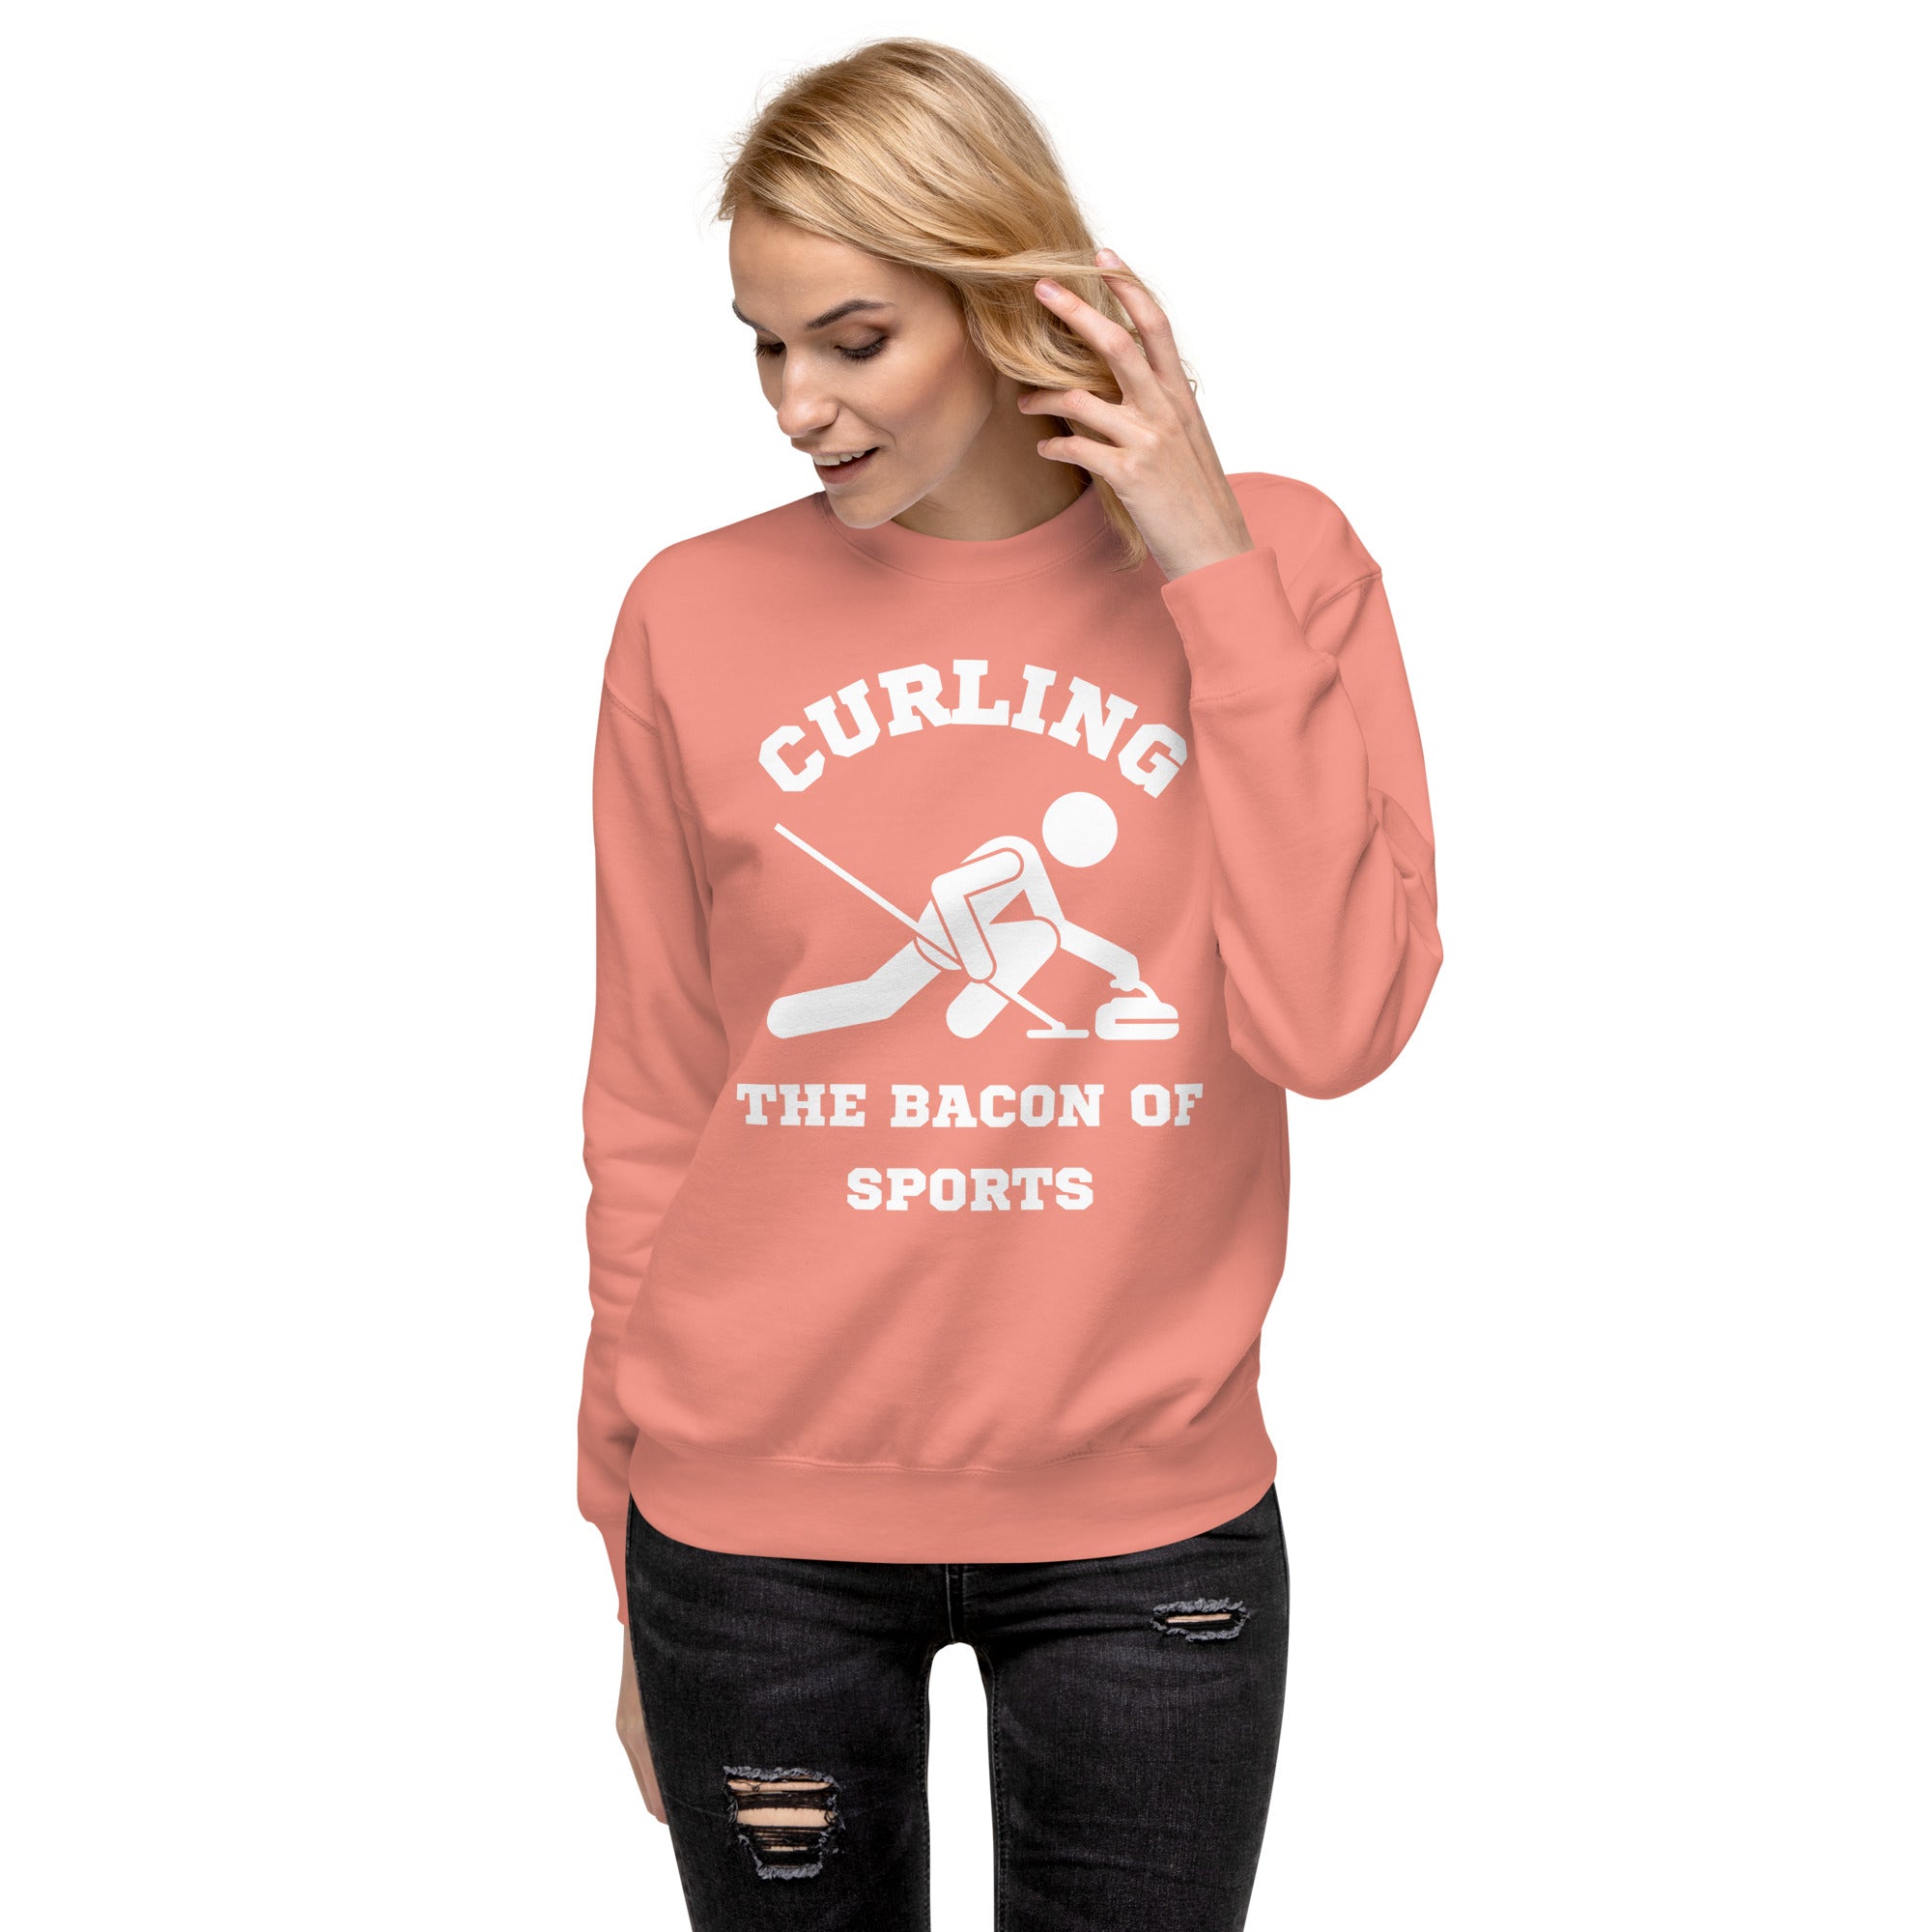 Curling The Bacon Of Sports Women's Premium Sweatshirt